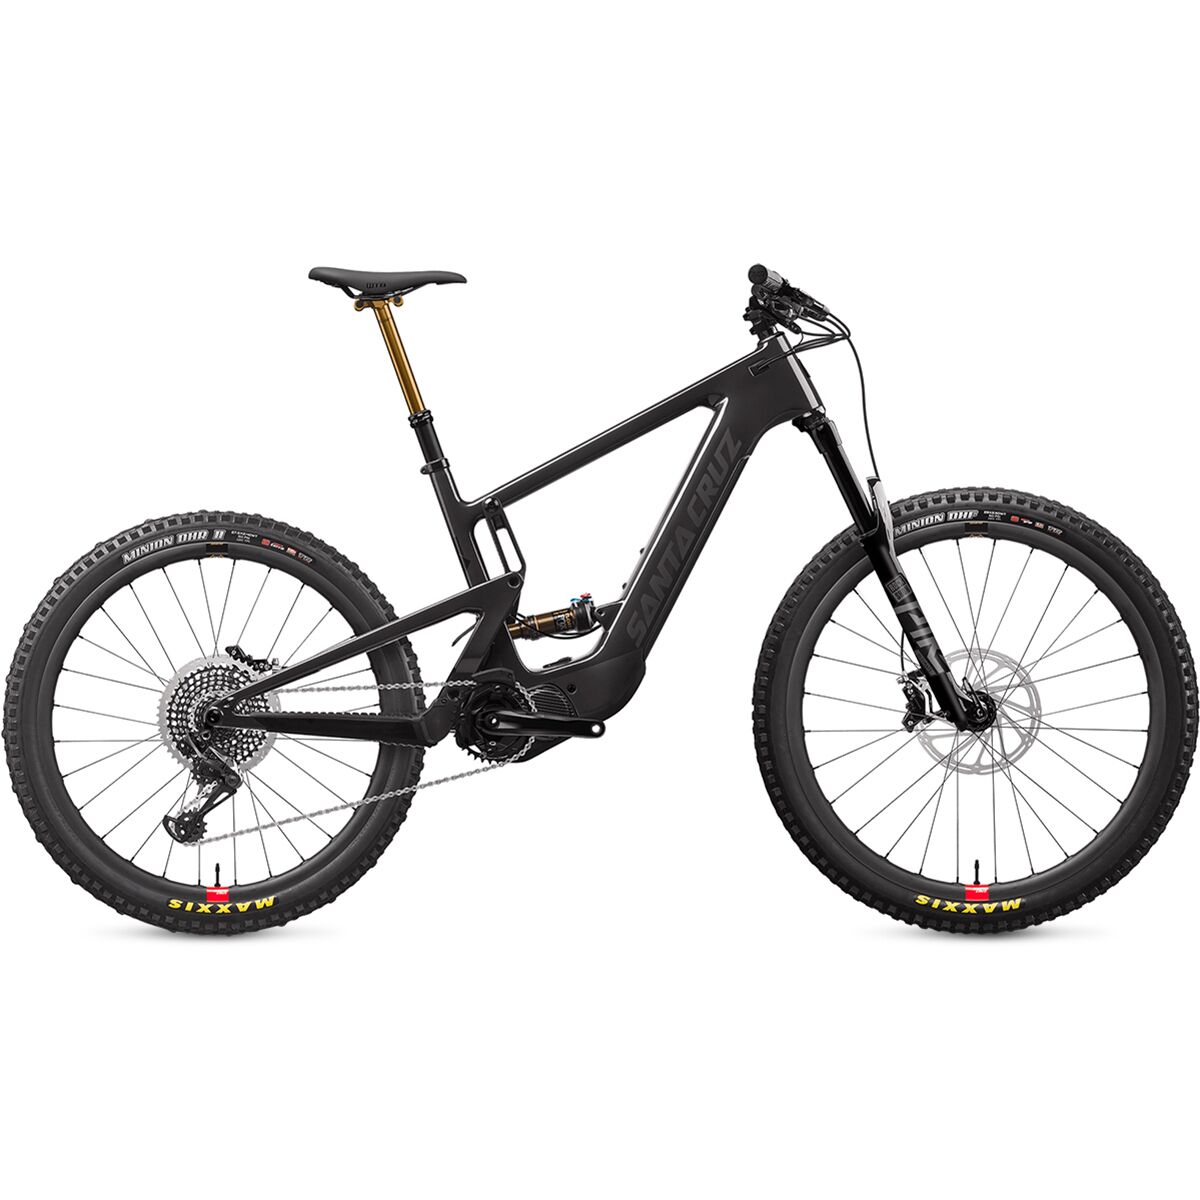 Santa Cruz Bicycles Heckler MX Carbon CC X01 Eagle Reserve e-Bike - 2021